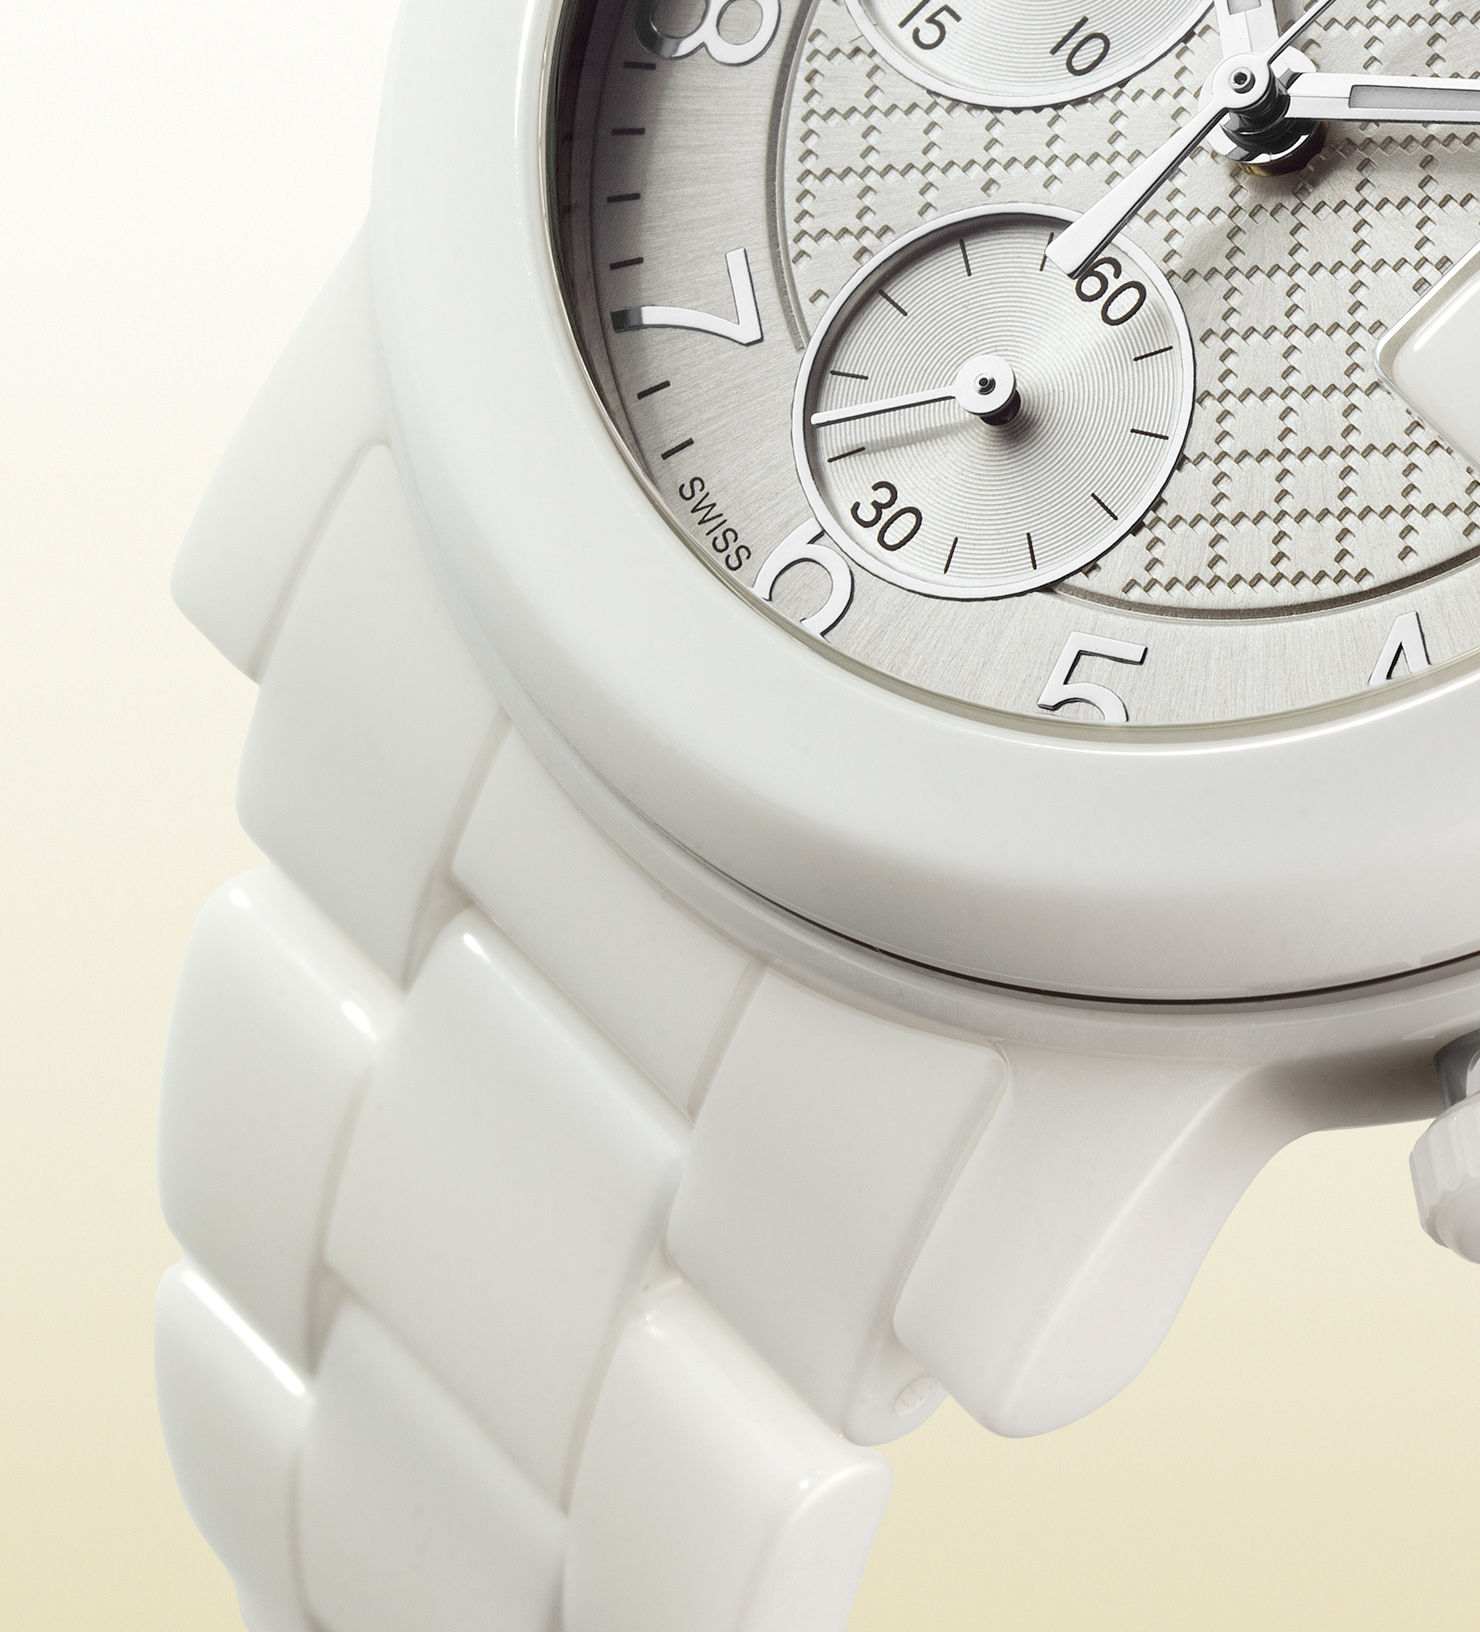 Gucci G-chrono Ceramic Watch in White | Lyst